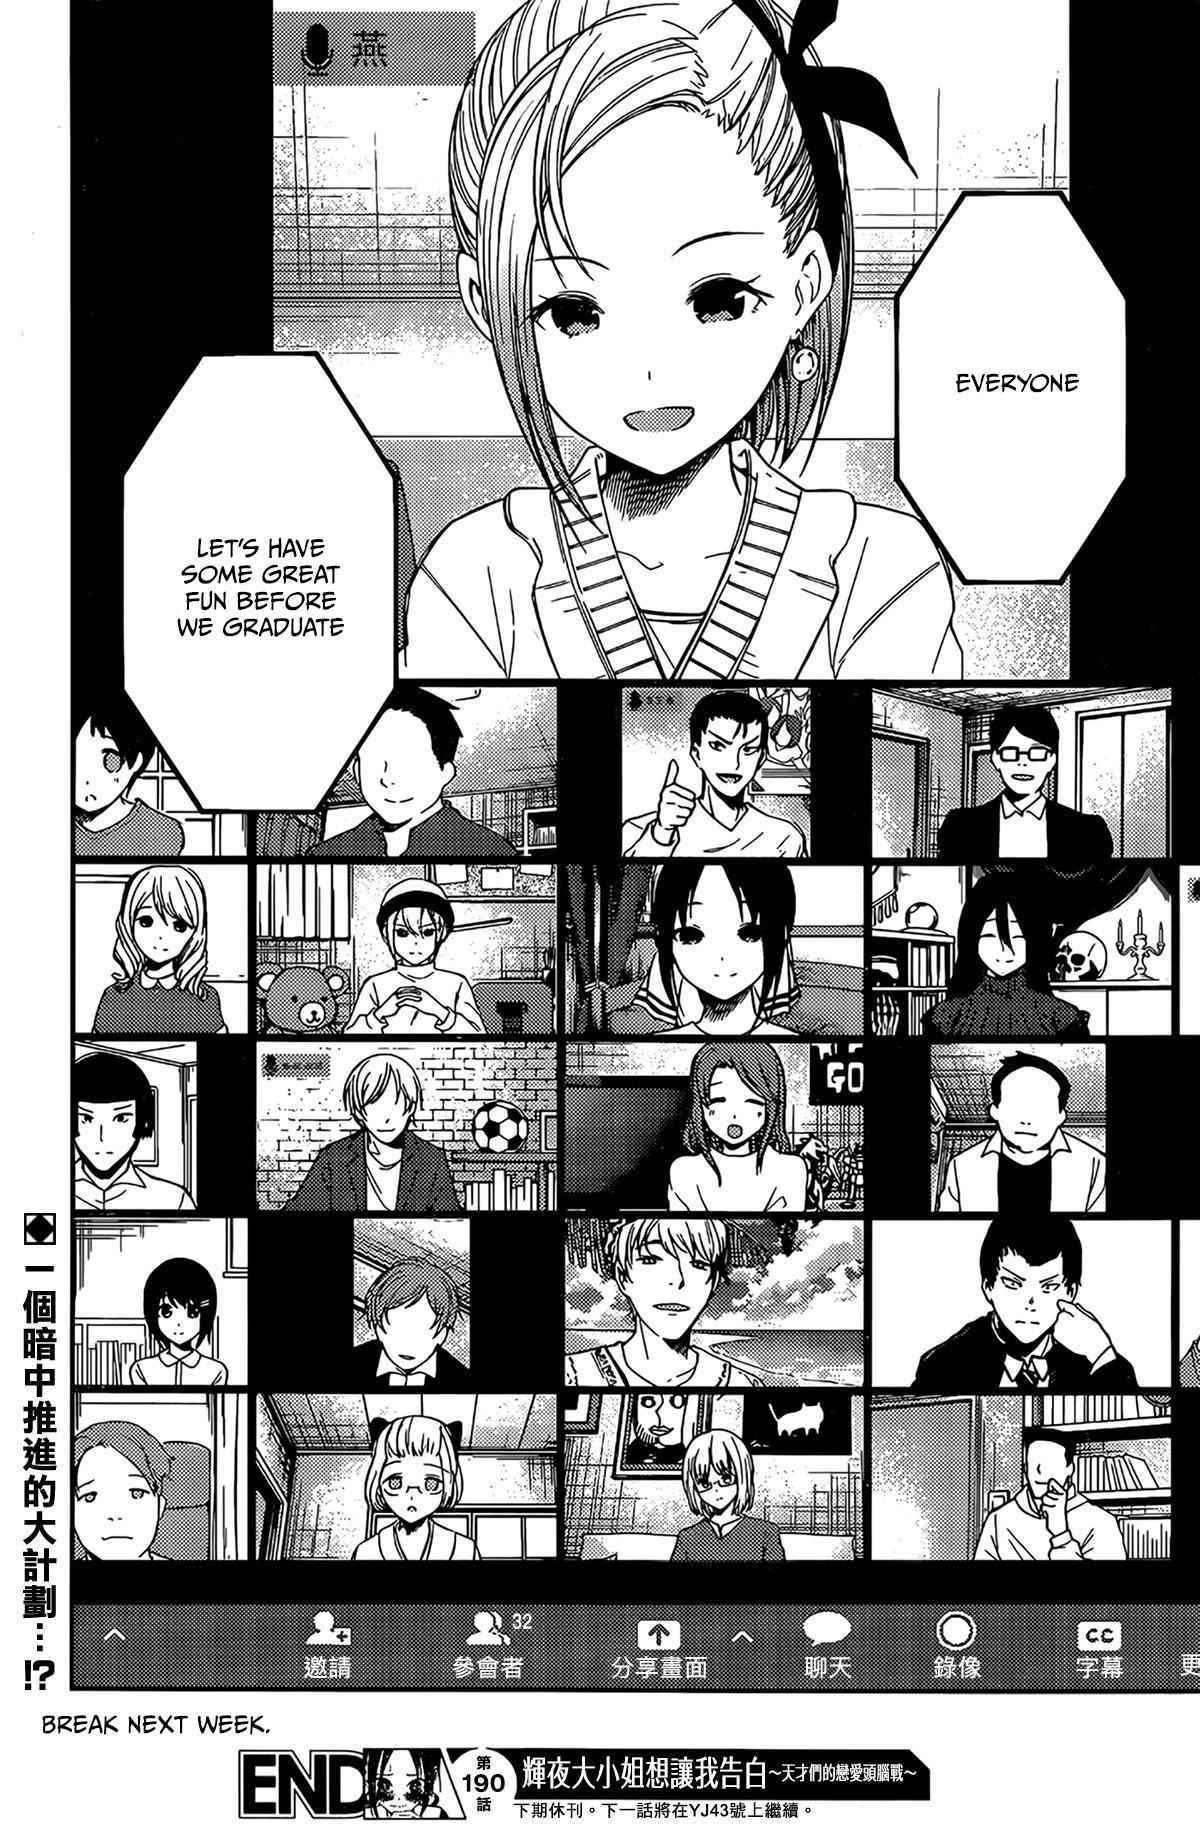 Kaguya-sama-wa-Kokurasetai-Ultra-Romantic-anime-pv-manga-chapter-110-adaptation-screenshot-destaque  - IntoxiAnime